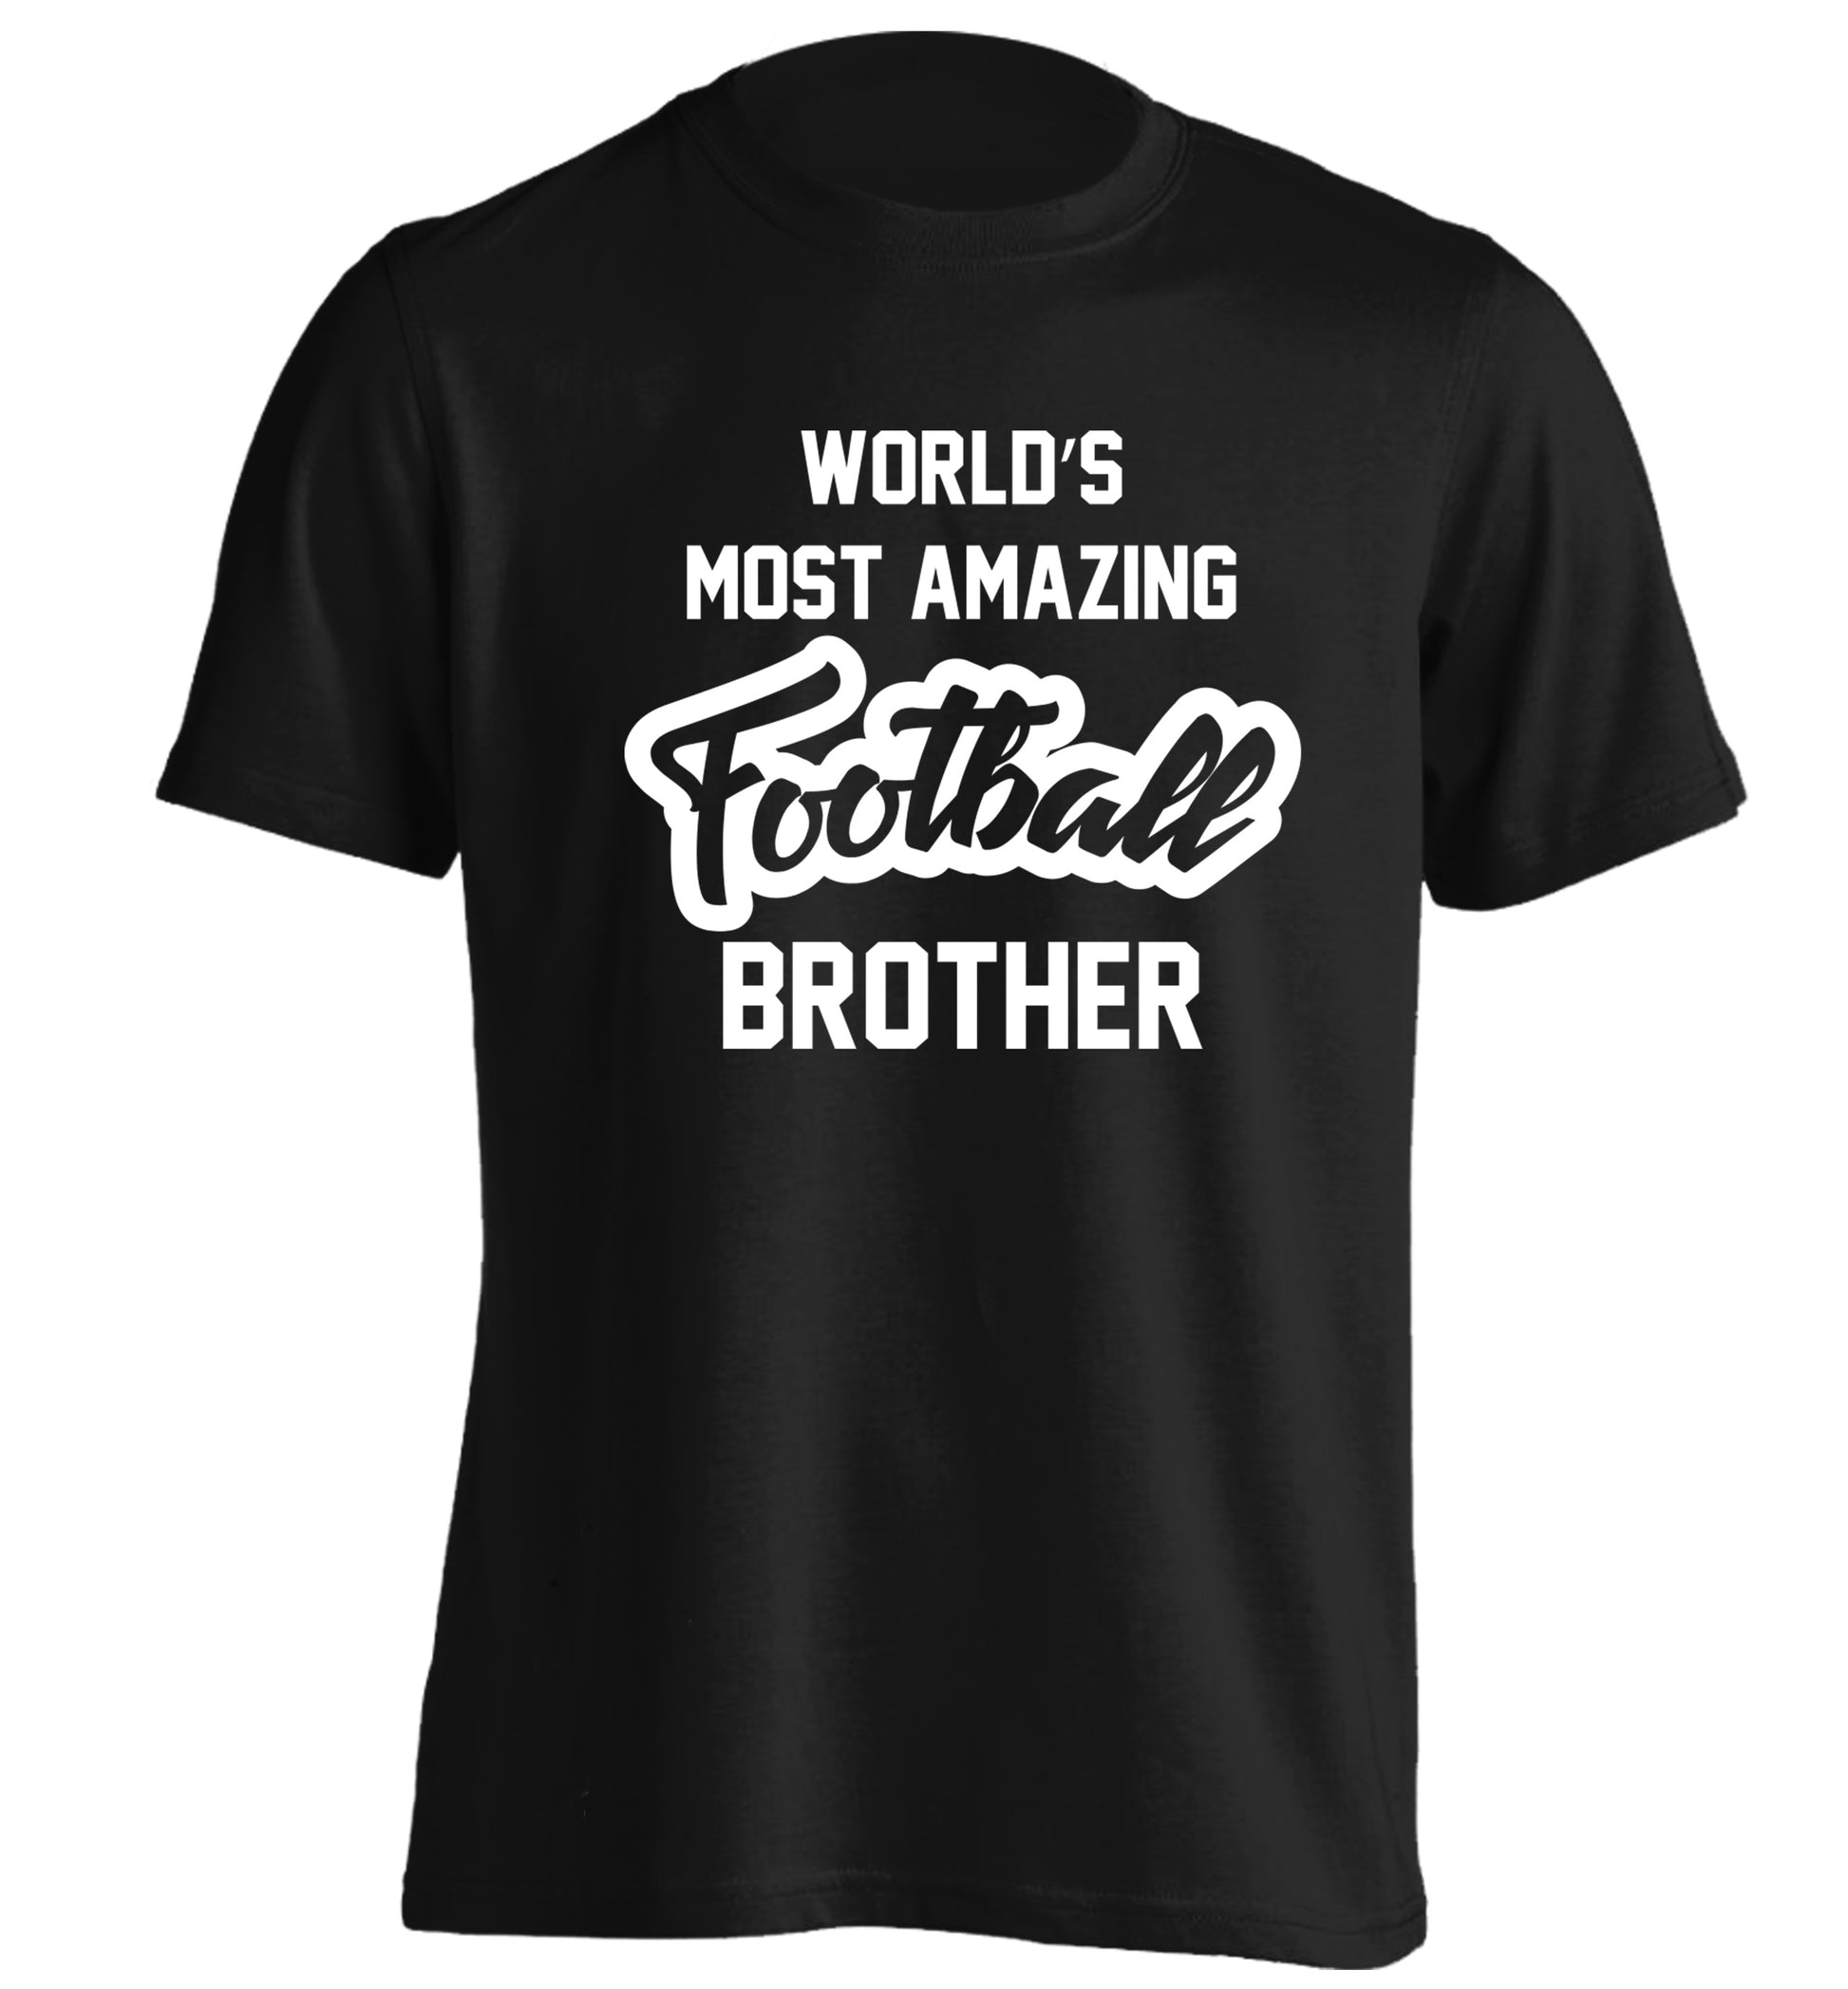 Worlds most amazing football brother adults unisexblack Tshirt 2XL